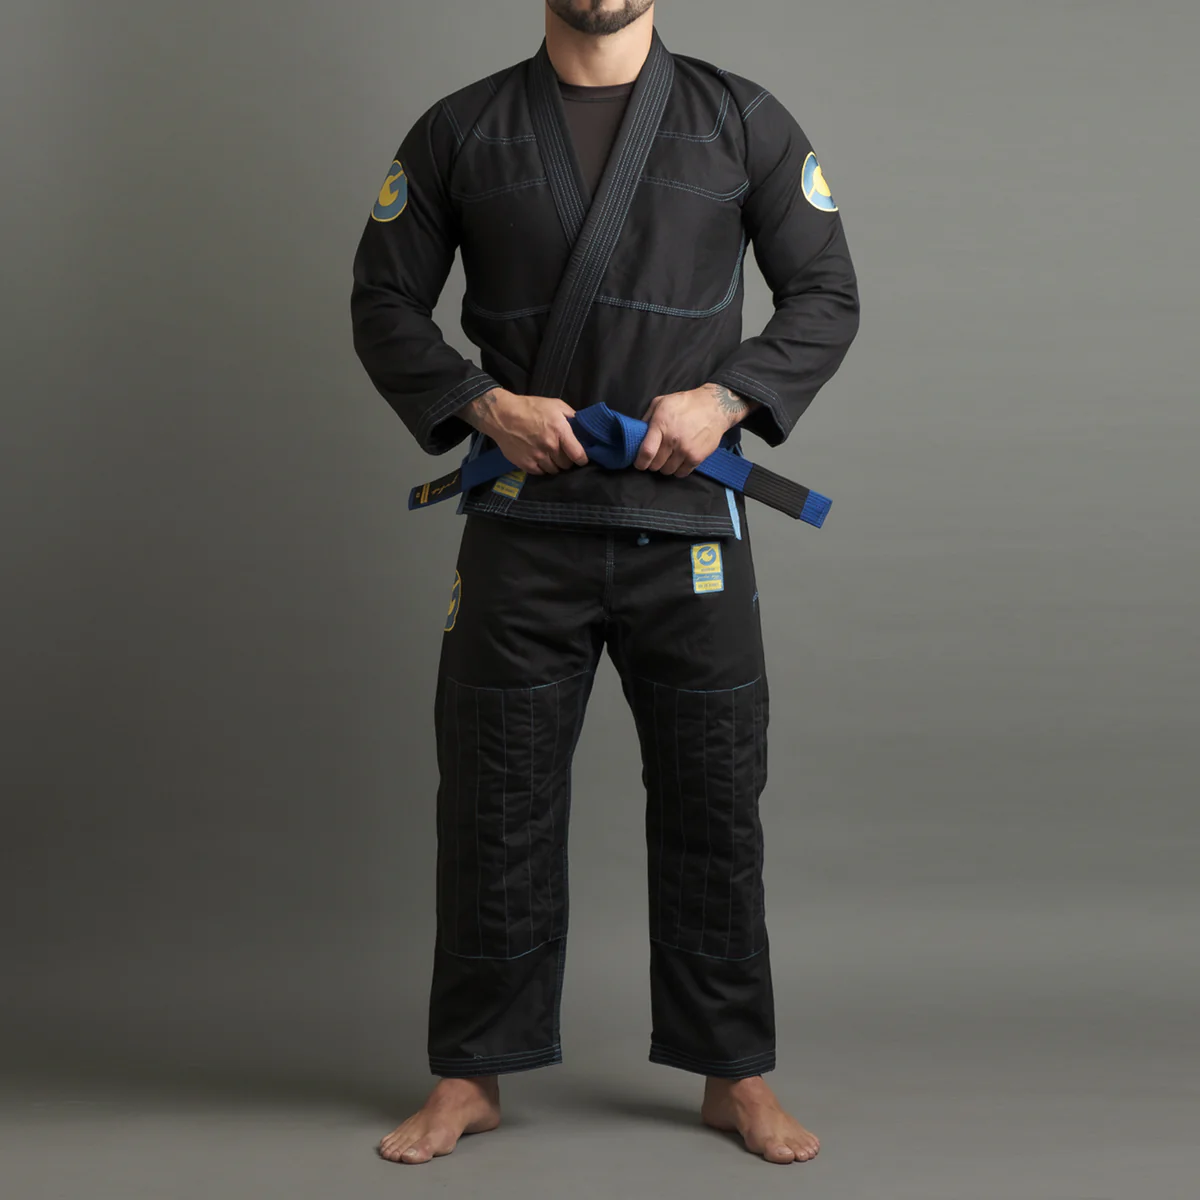 Gold BJJ | Premium Jiu Jitsu Gear: Gis, Rash Guards, Fight Shorts & More